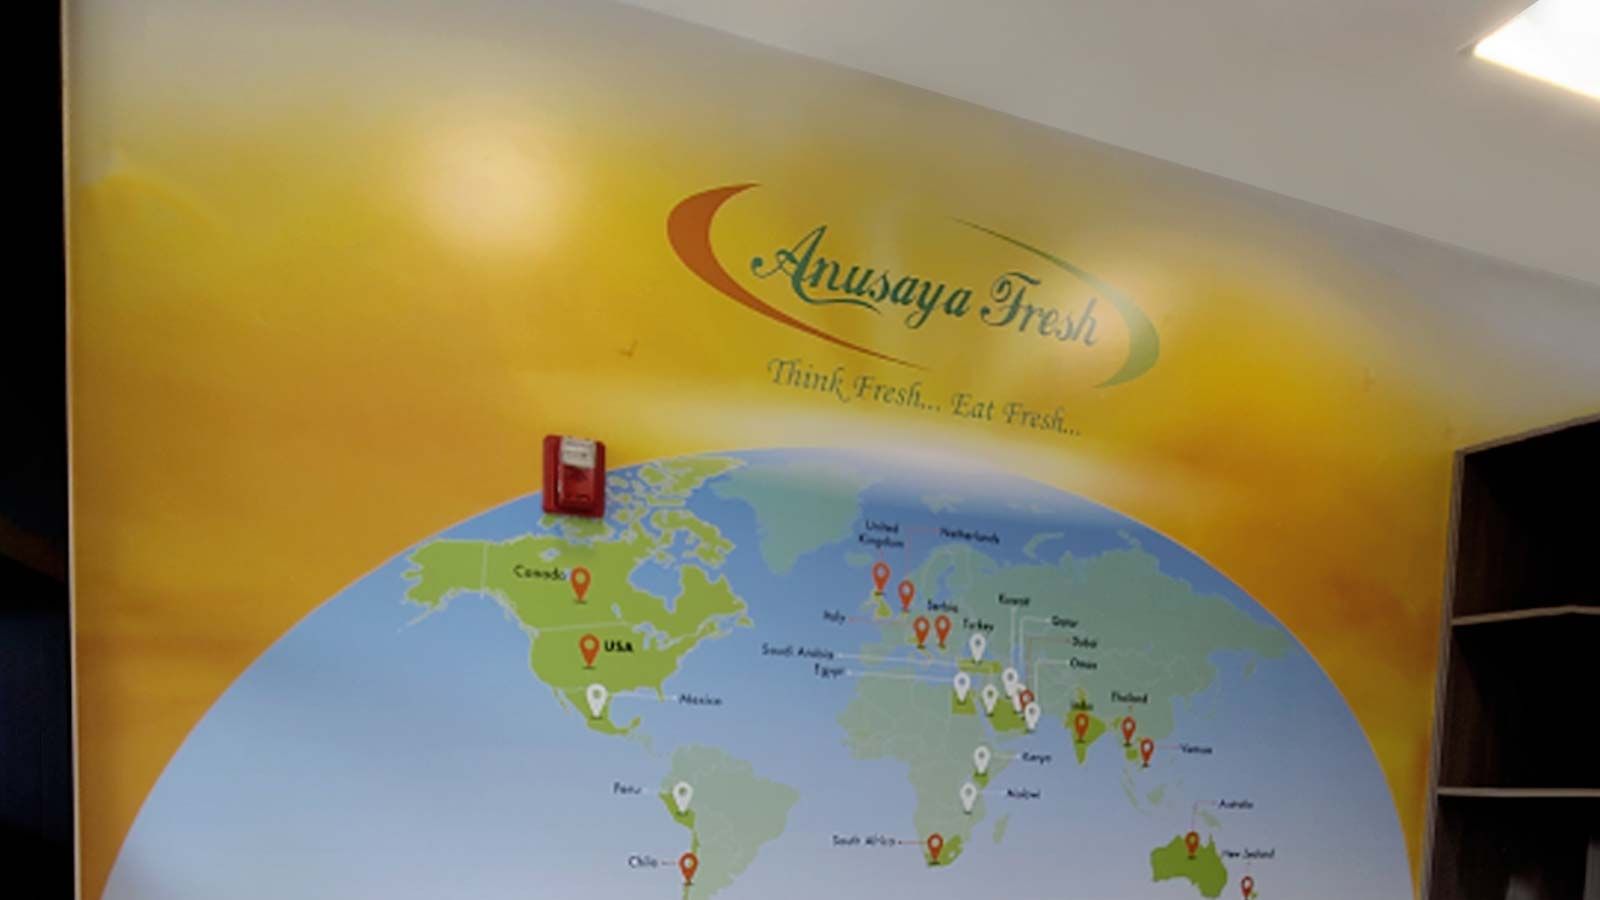 Anusaya Fresh branding wall decal